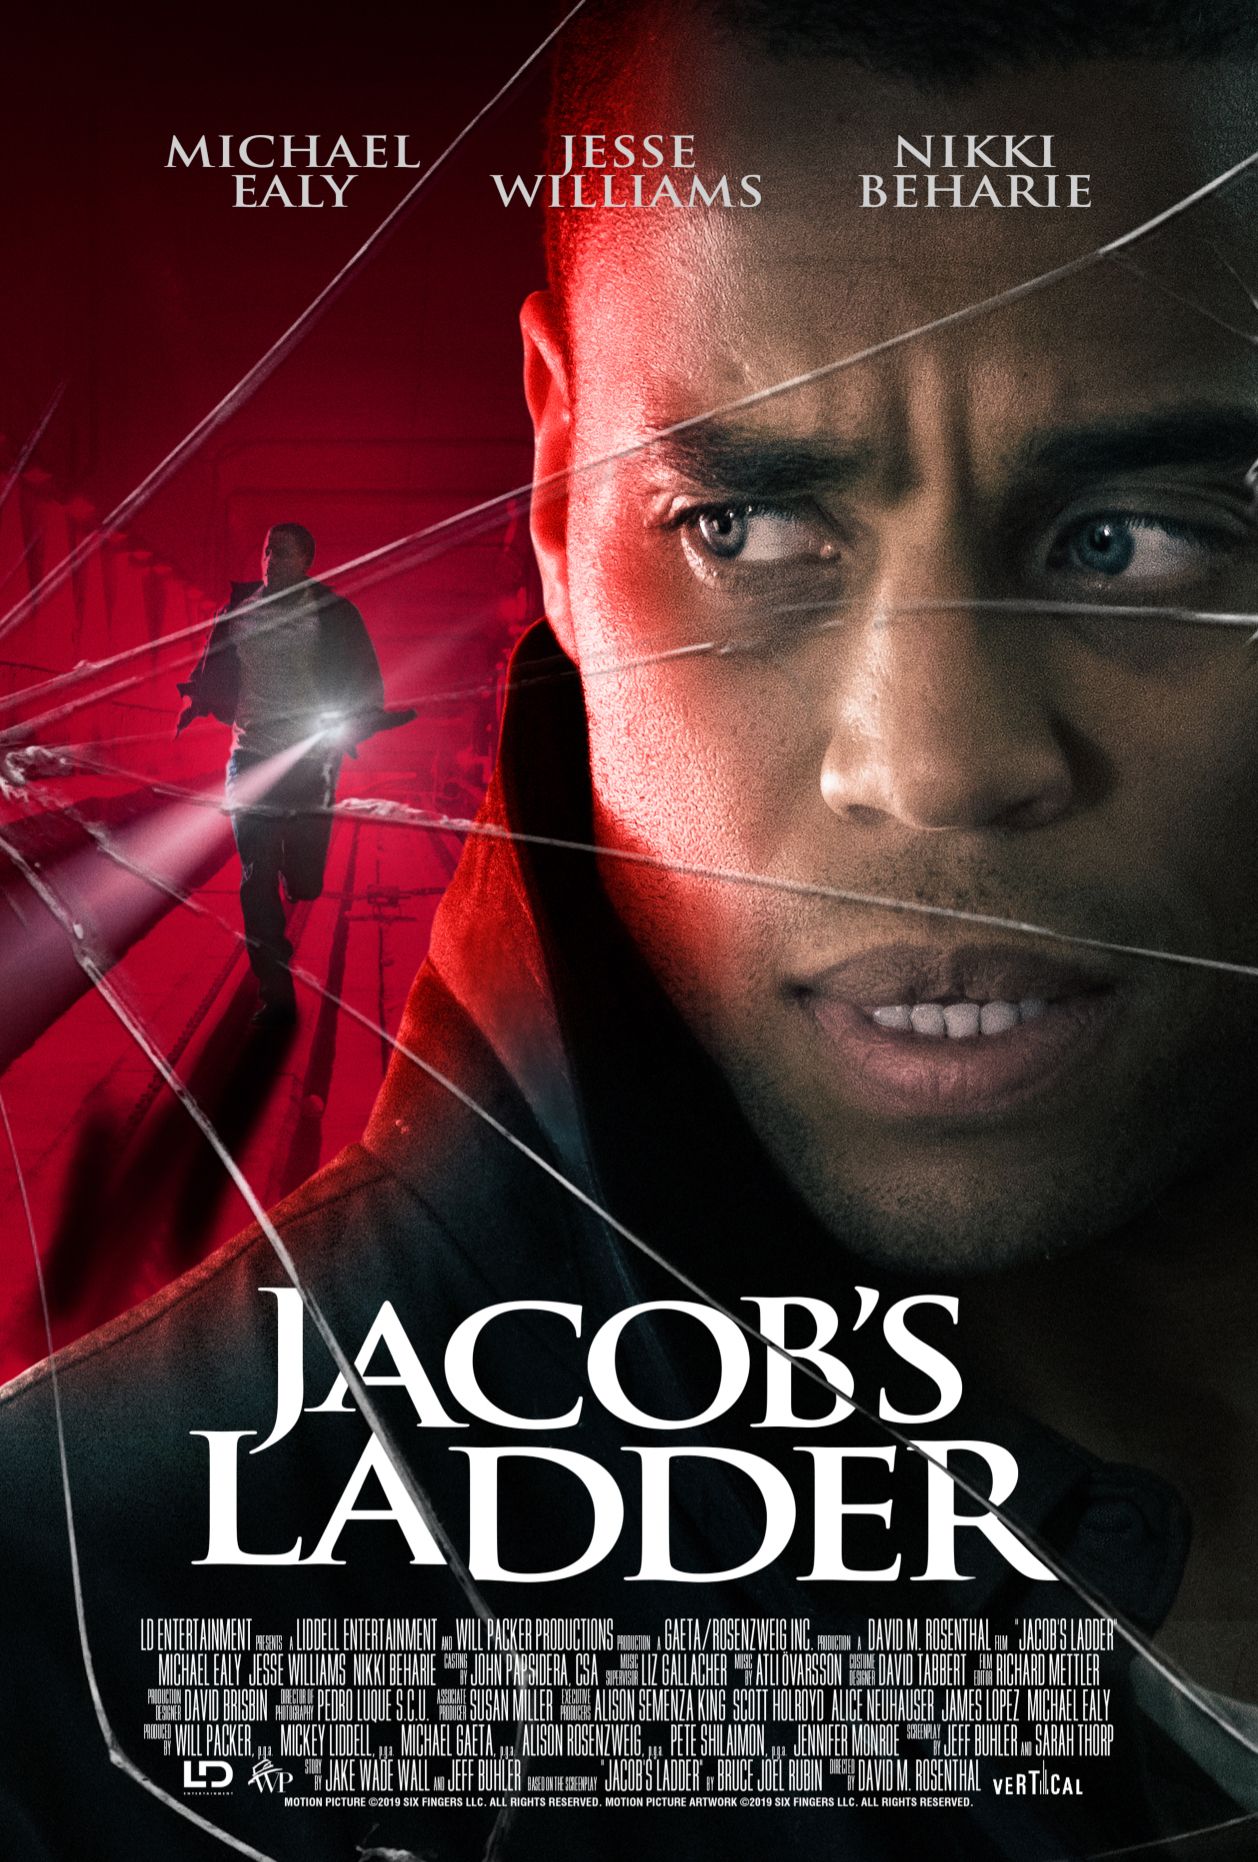 Jacob's Ladder remake poster